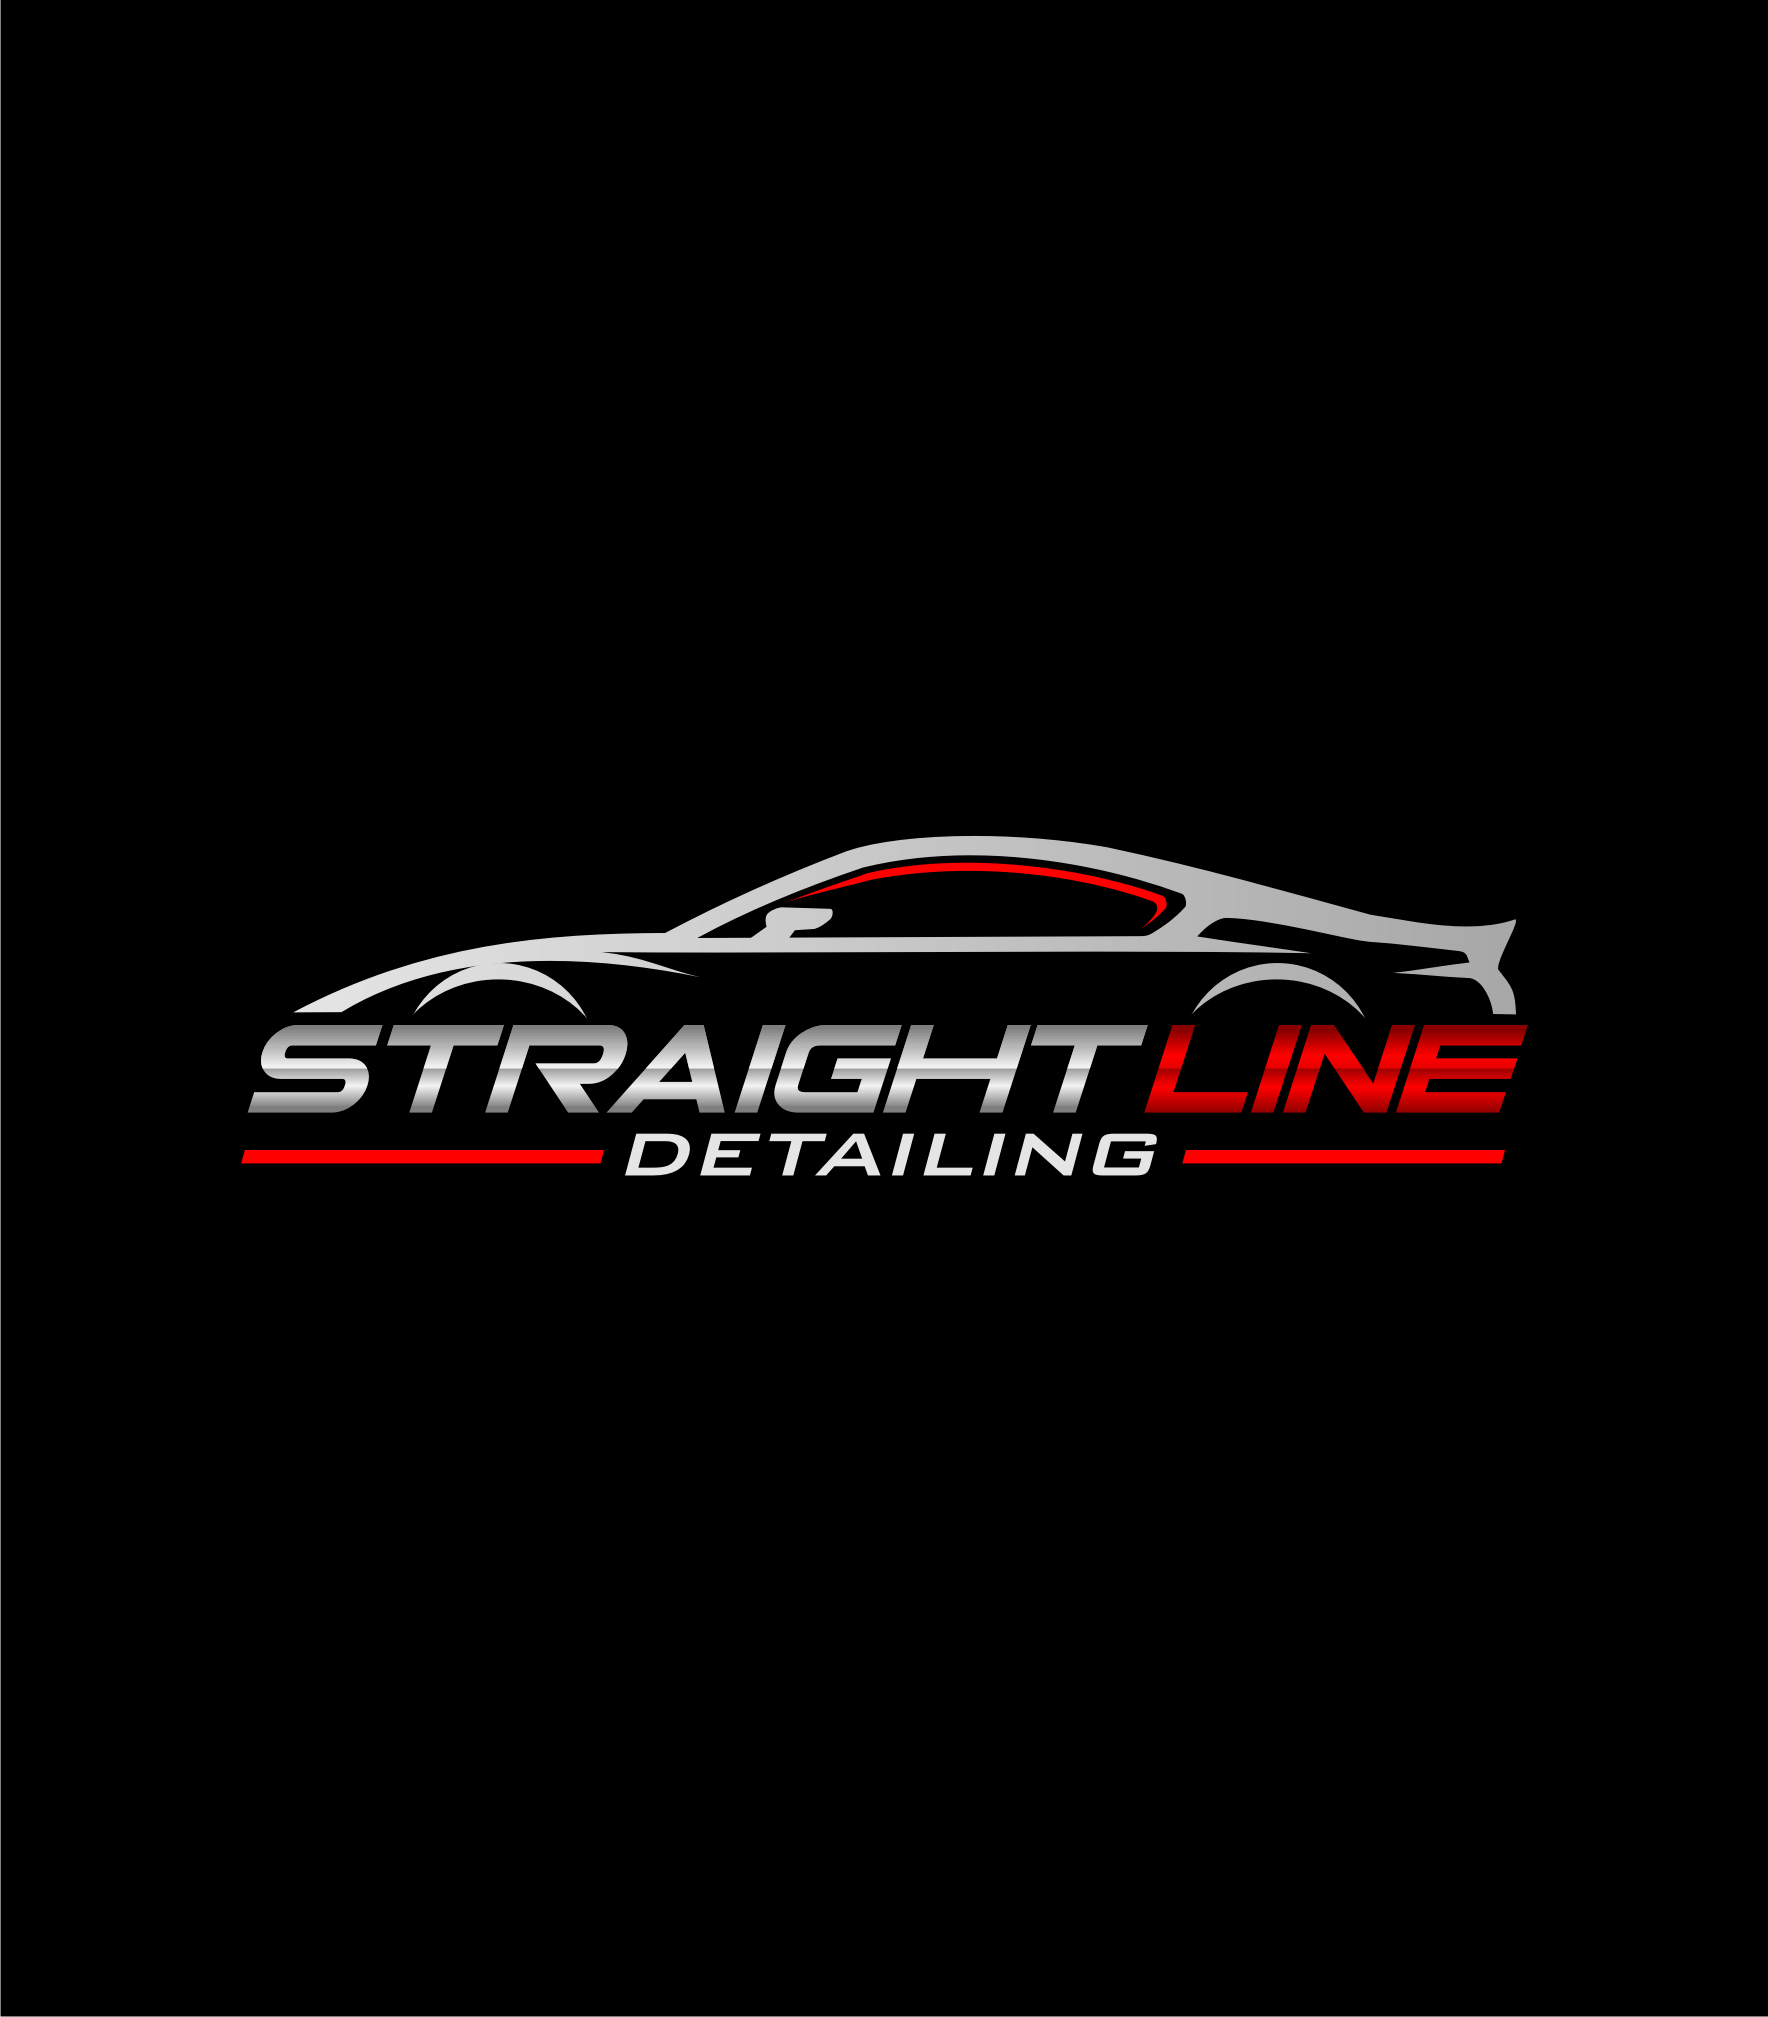 Auto Detailing Logo - Generic & overused logo designs sold Automotive